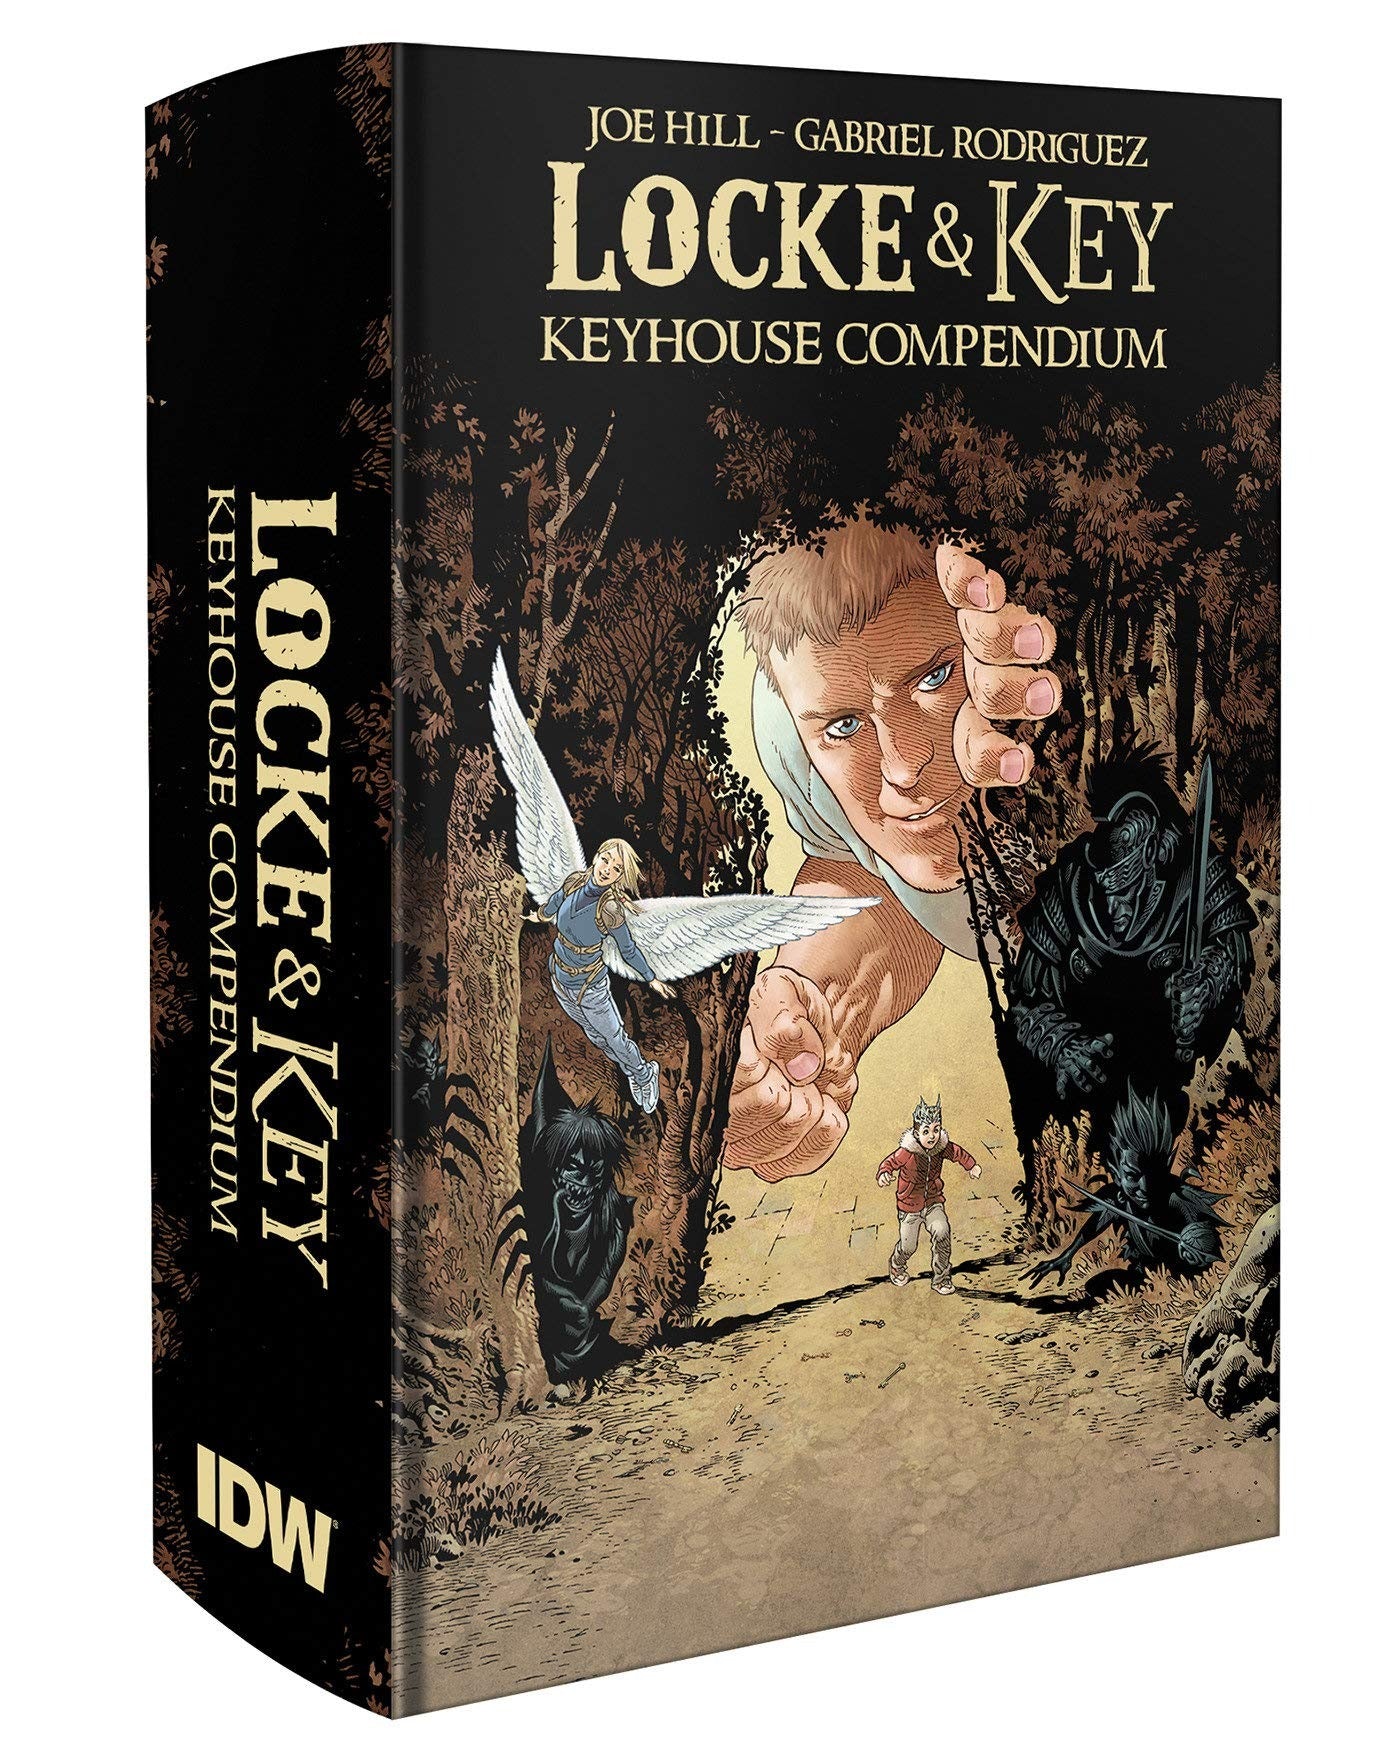 Locke & Key: Keyhouse Compendium by Joe Hill Hardcover (PREORDER)